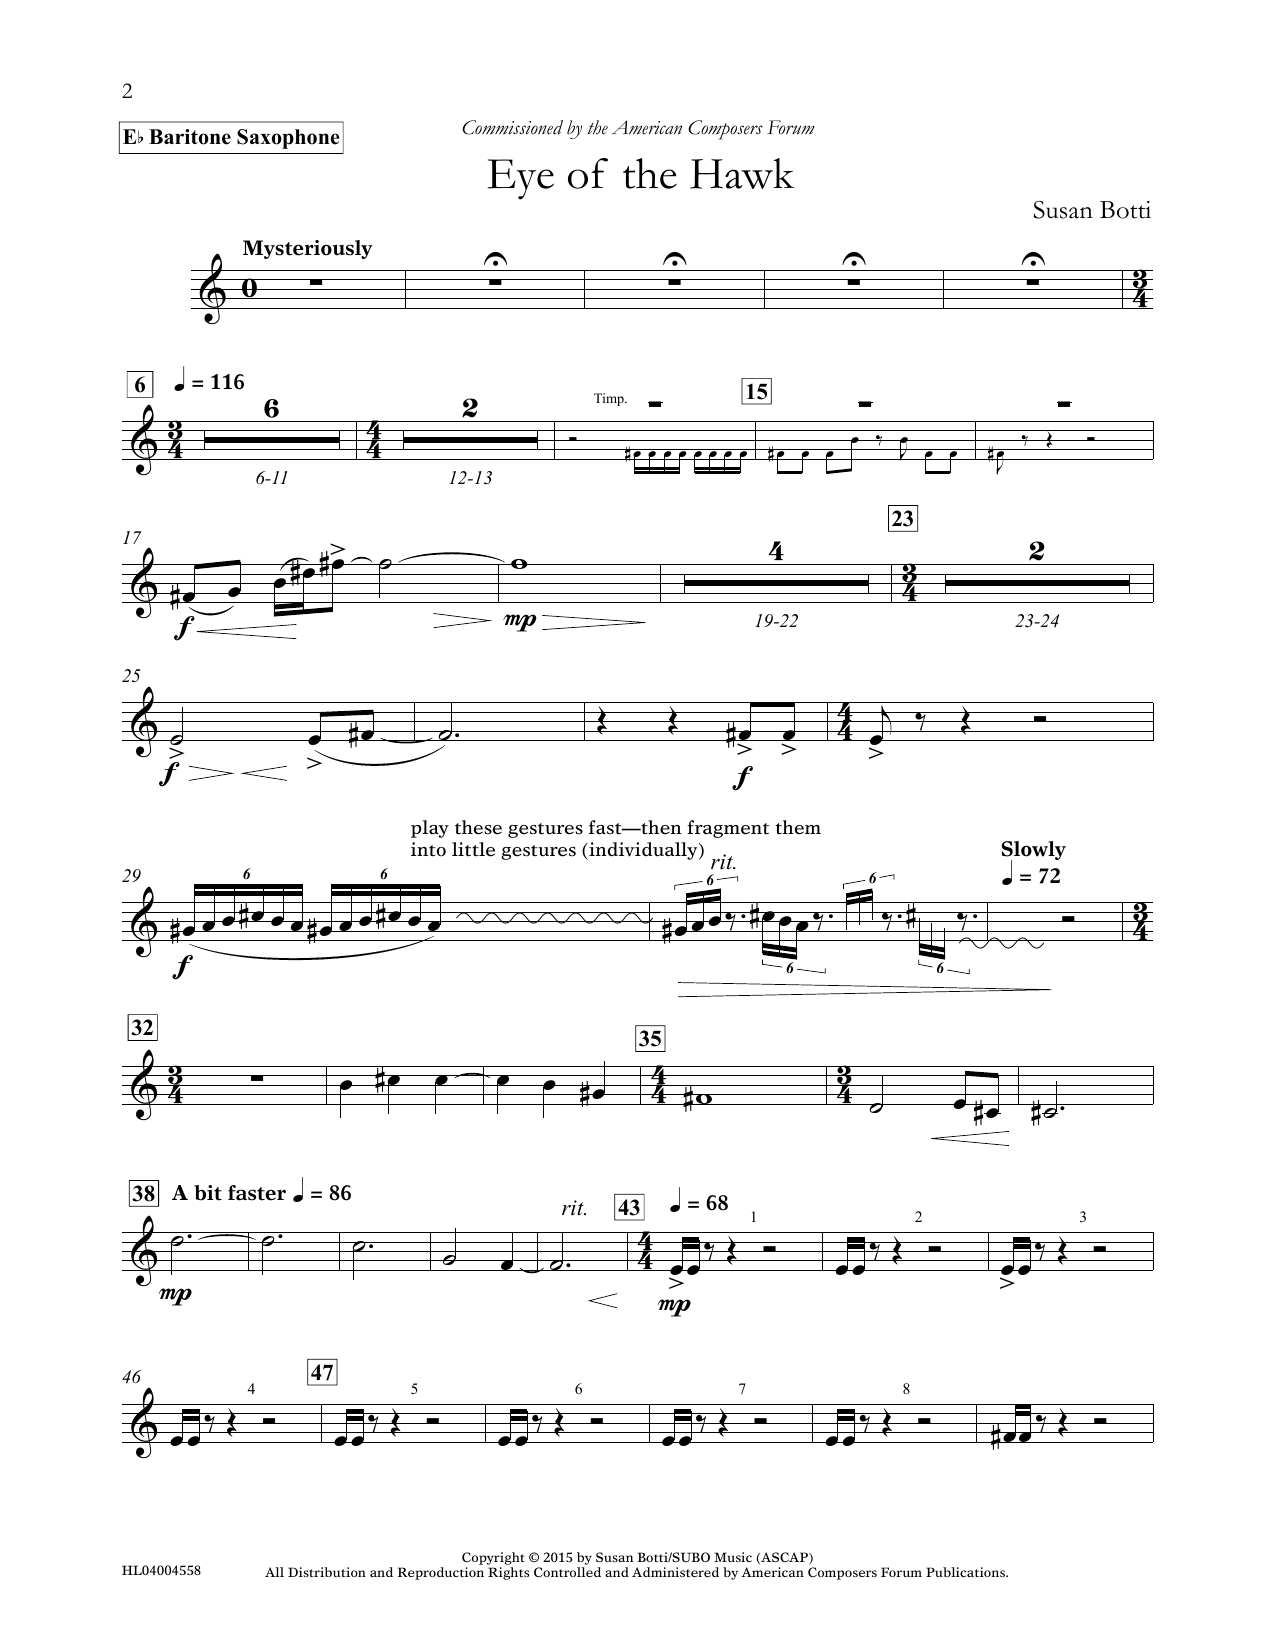 Download Susan Botti Eye of the Hawk - Eb Baritone Saxophone Sheet Music